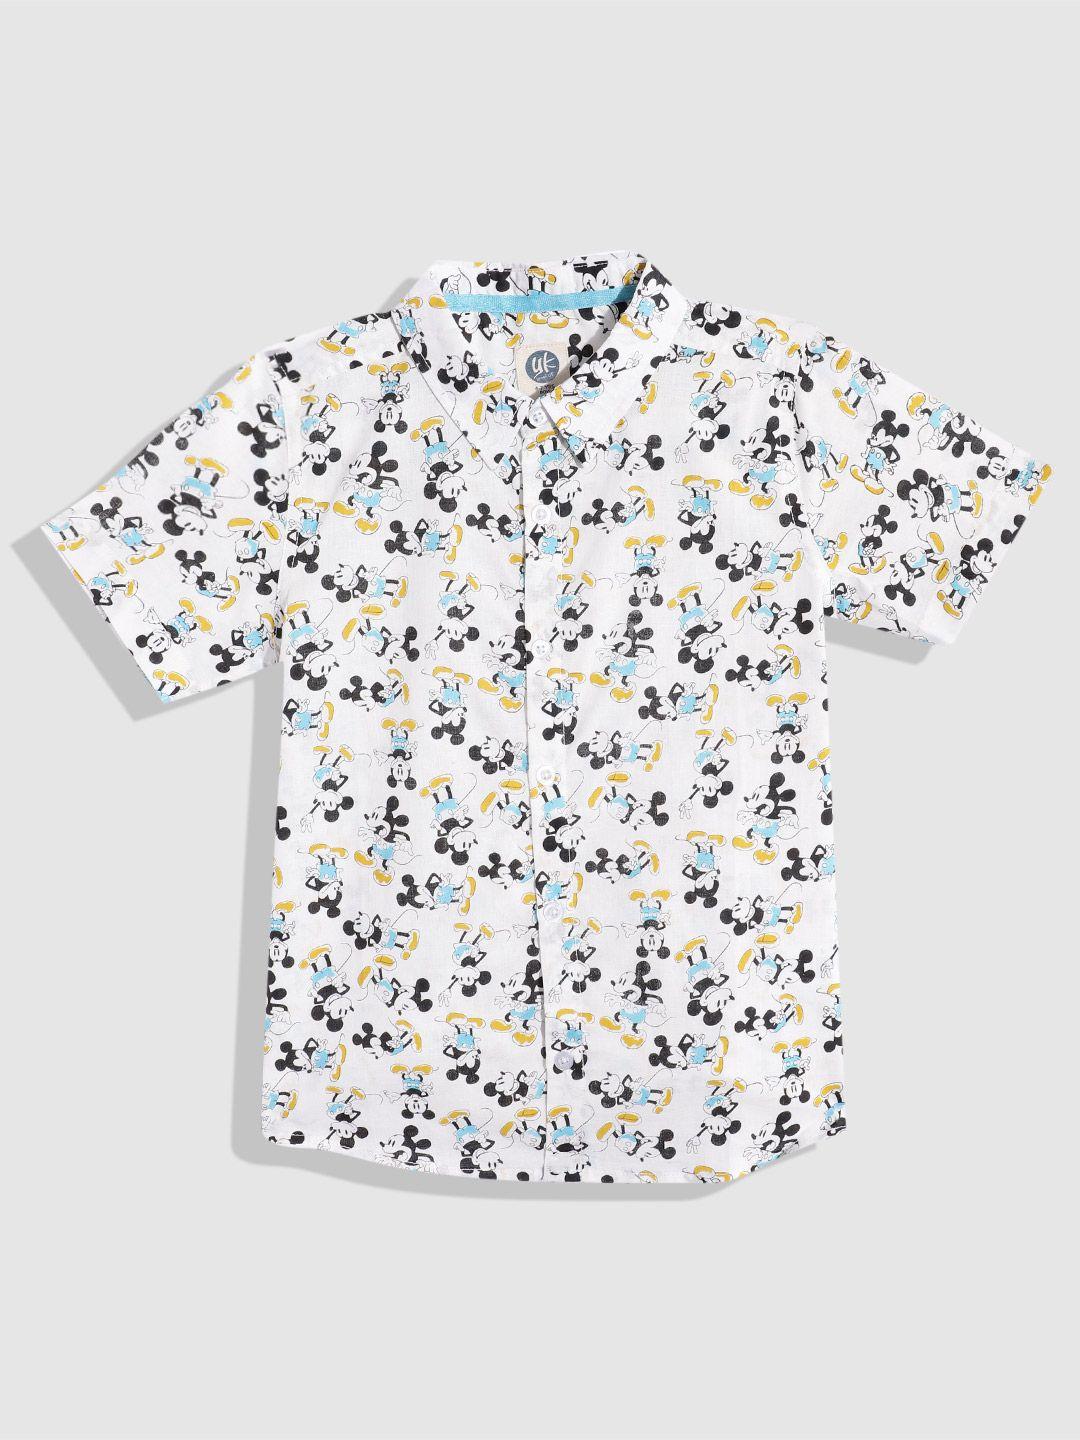 yk disney boys white & black regular fit pure cotton mickey mouse print casual shirt